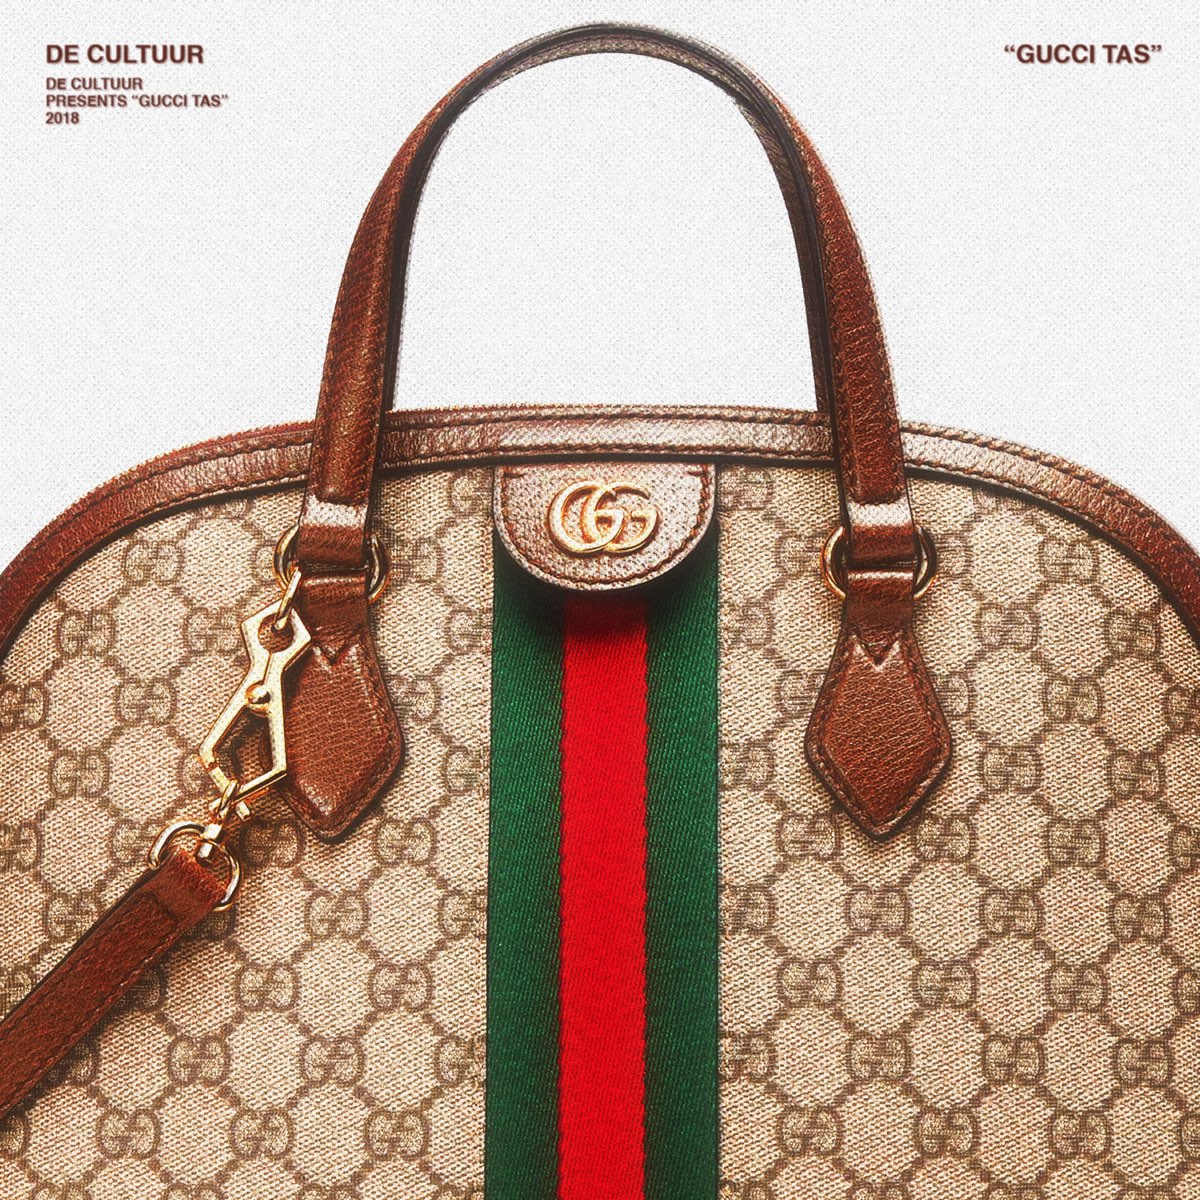 Imitatie systeem corruptie Gucci Tas - Single by De Cultuur on Apple Music